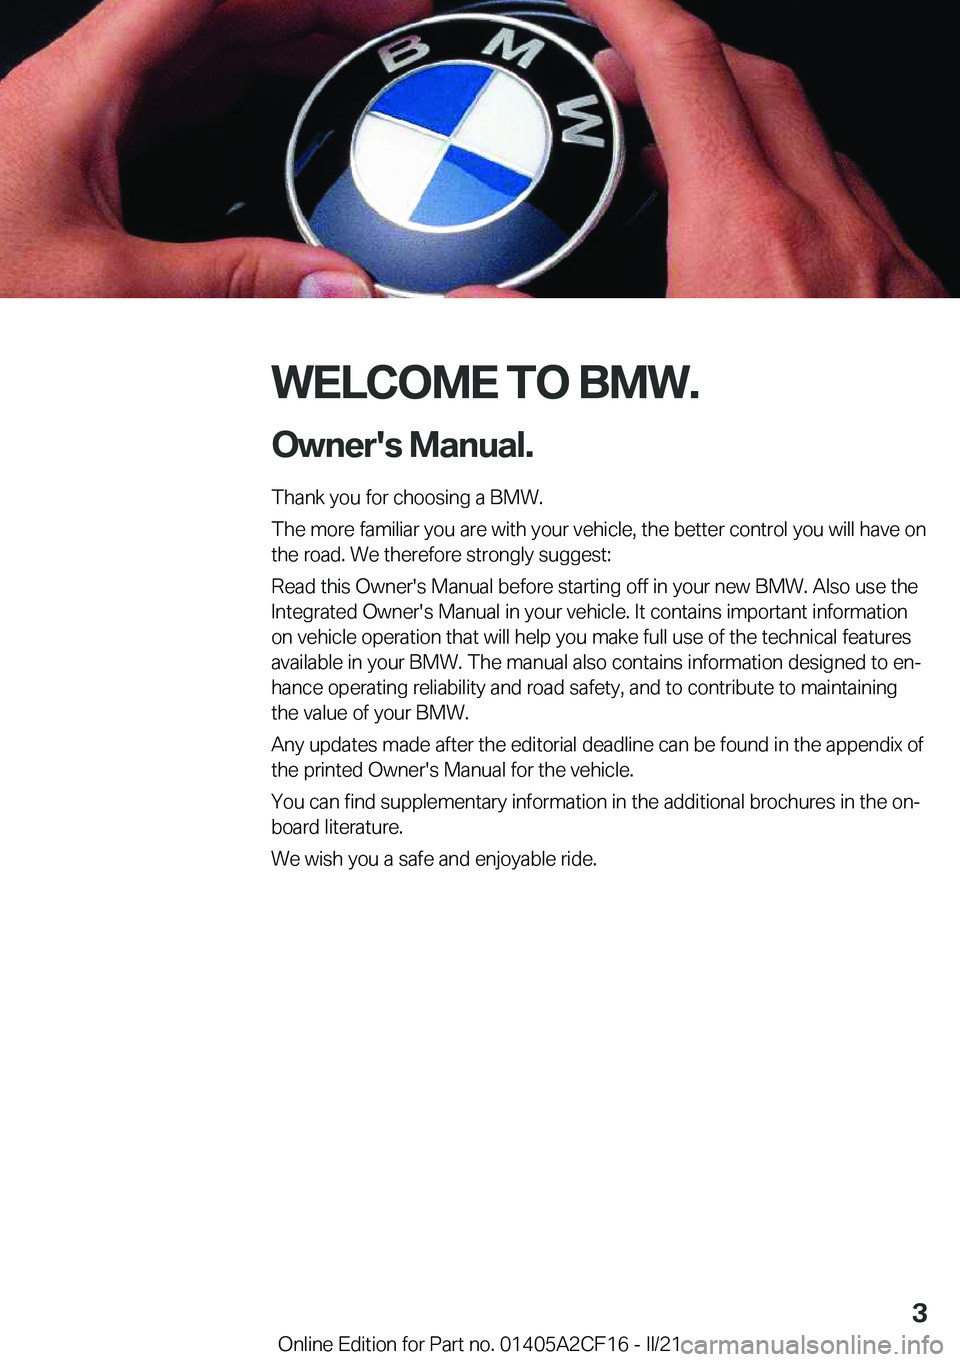 BMW X2 2022  Owners Manual �W�E�L�C�O�M�E��T�O��B�M�W�.�O�w�n�e�r�'�s��M�a�n�u�a�l�.
�T�h�a�n�k��y�o�u��f�o�r��c�h�o�o�s�i�n�g��a��B�M�W�.
�T�h�e��m�o�r�e��f�a�m�i�l�i�a�r��y�o�u��a�r�e��w�i�t�h��y�o�u�r��v�e